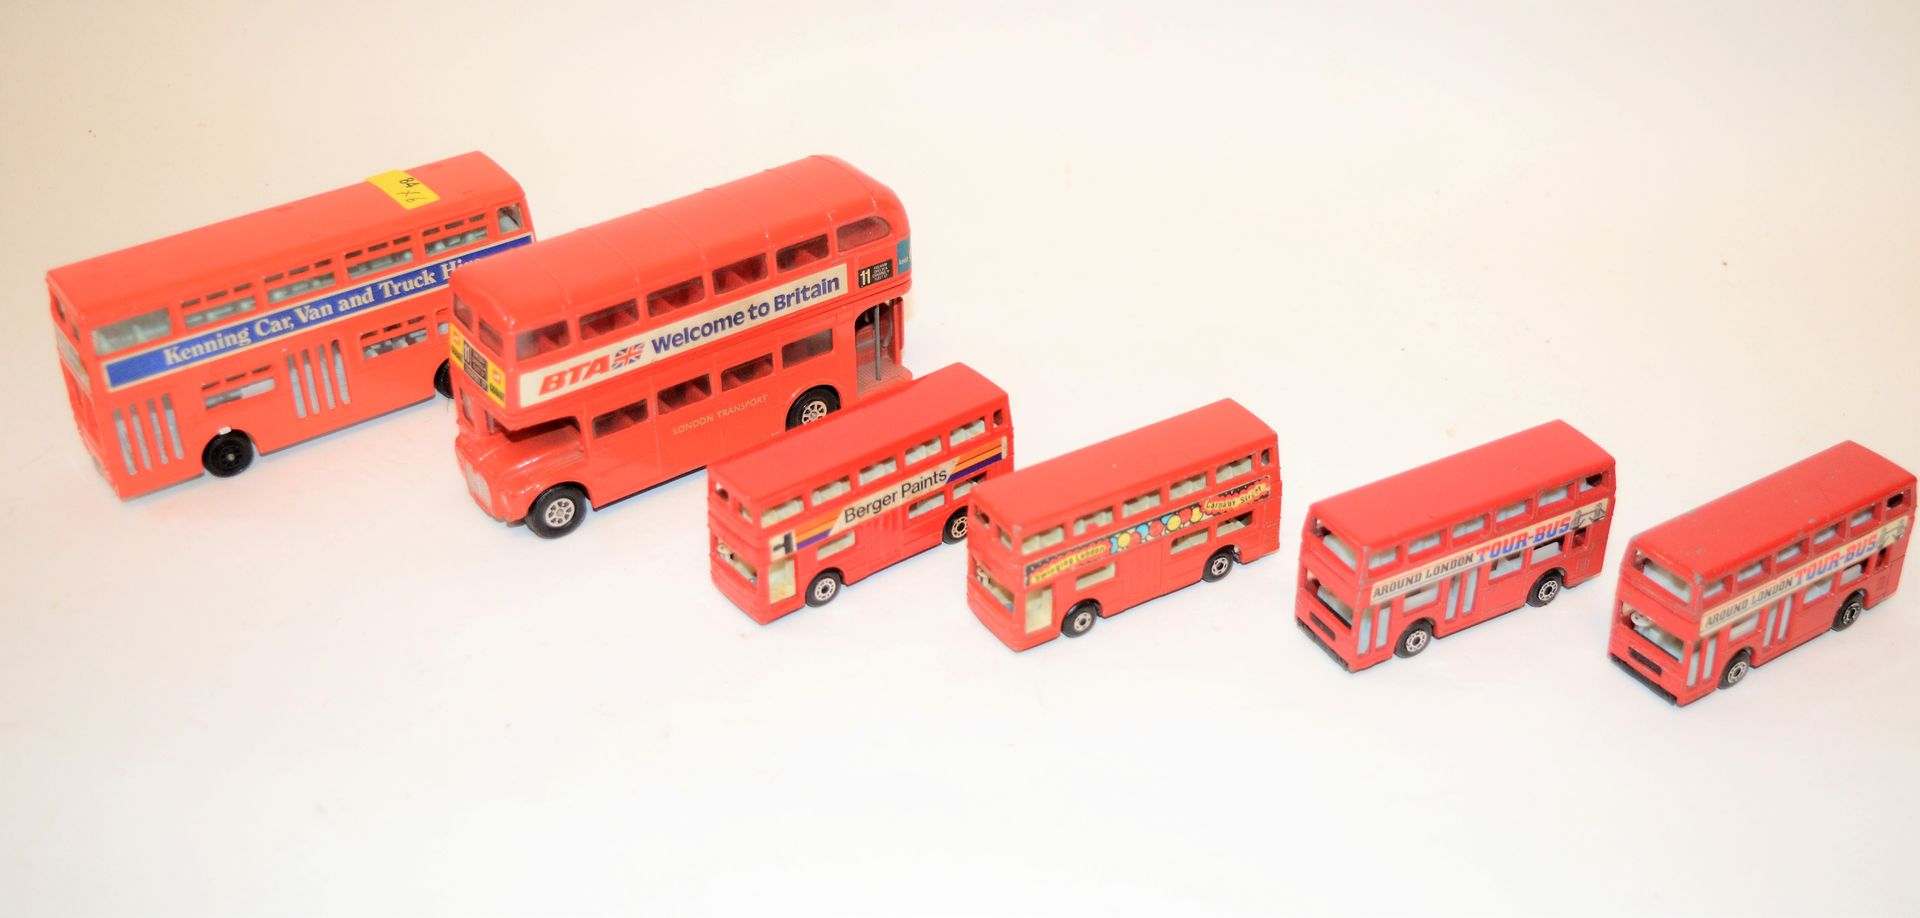 Null Juego de 6 autobuses imperiales ingleses:

-GORGI "London transport routema&hellip;